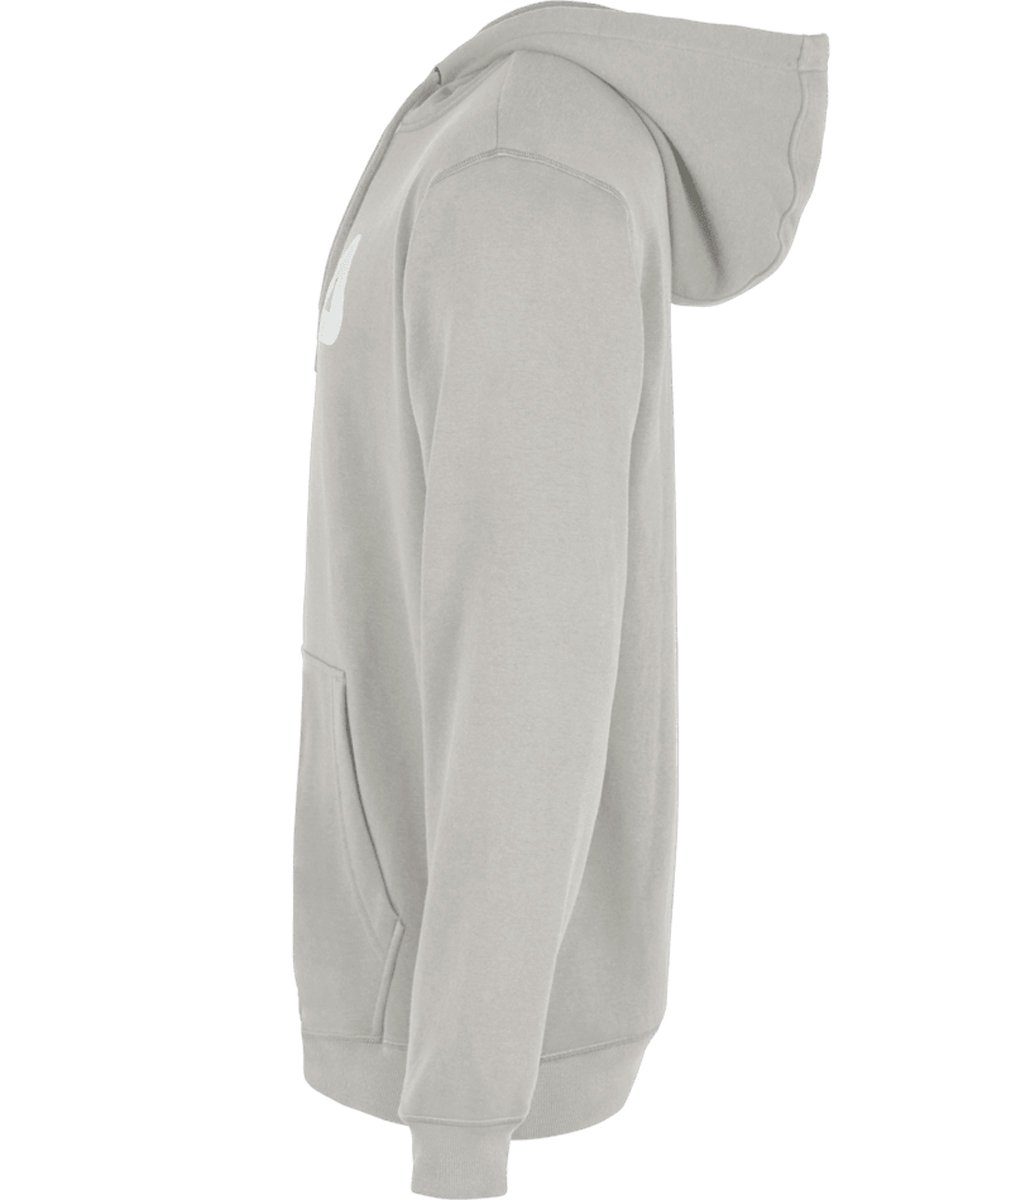 Unisex Sweatshirt BARUMINI hoody, Sweater Fila - Hoodie Grau